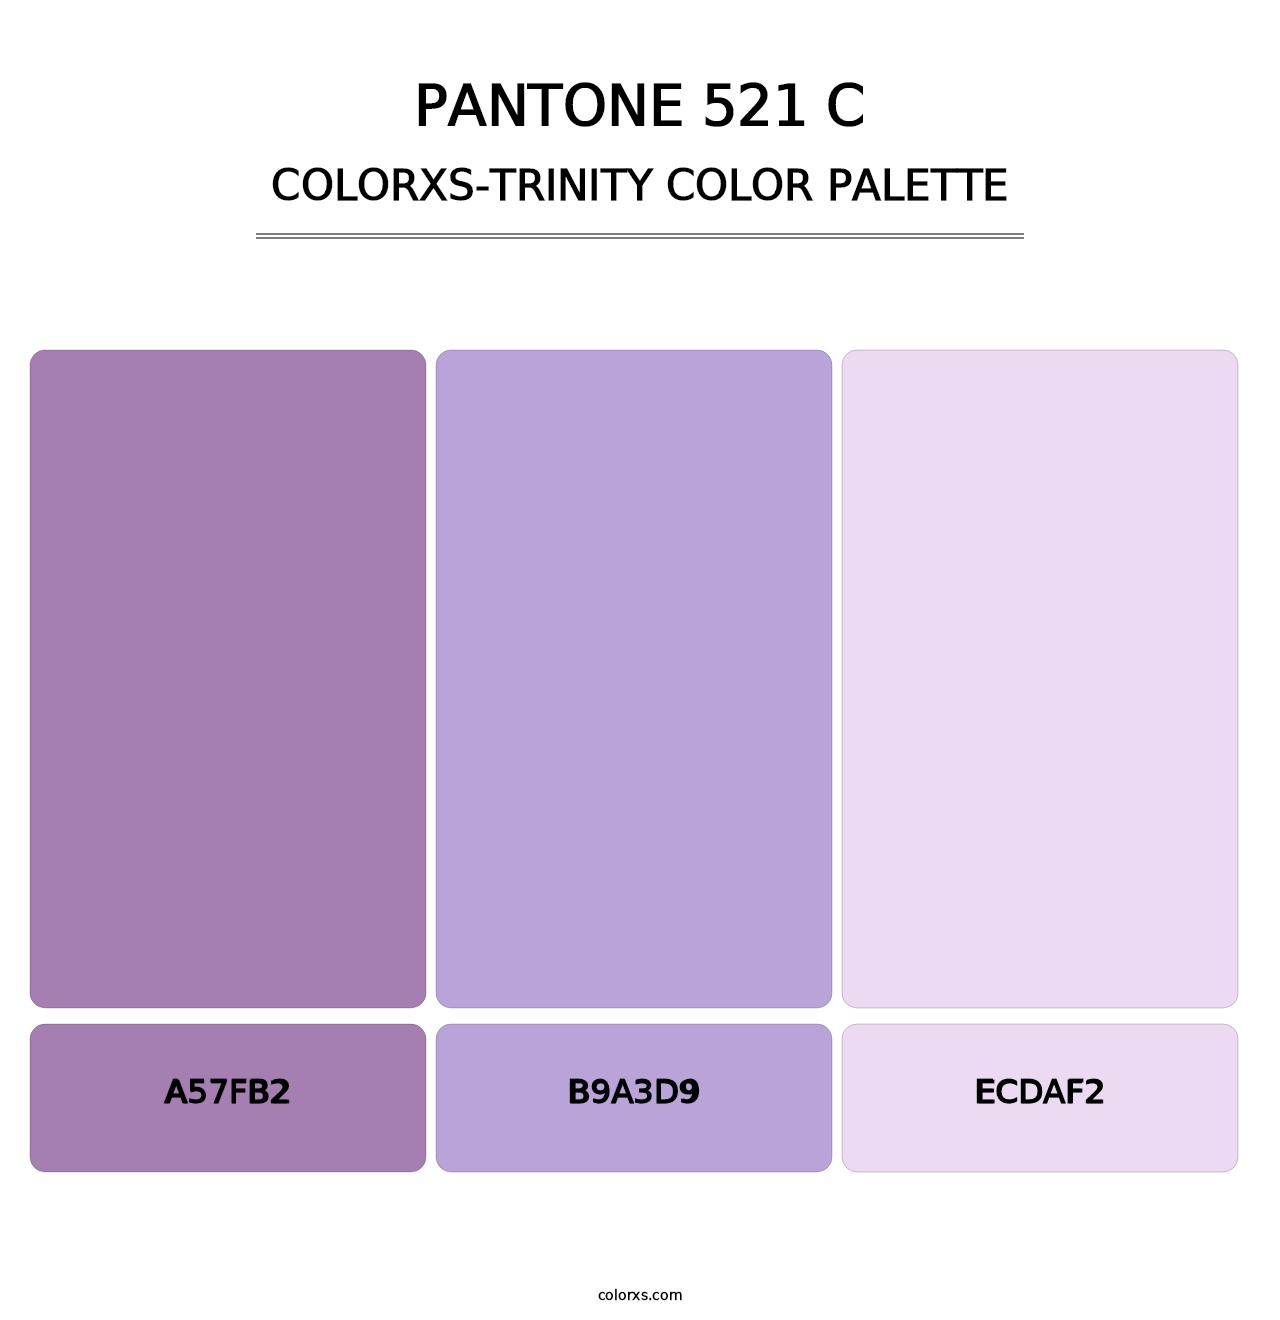 PANTONE 521 C - Colorxs Trinity Palette